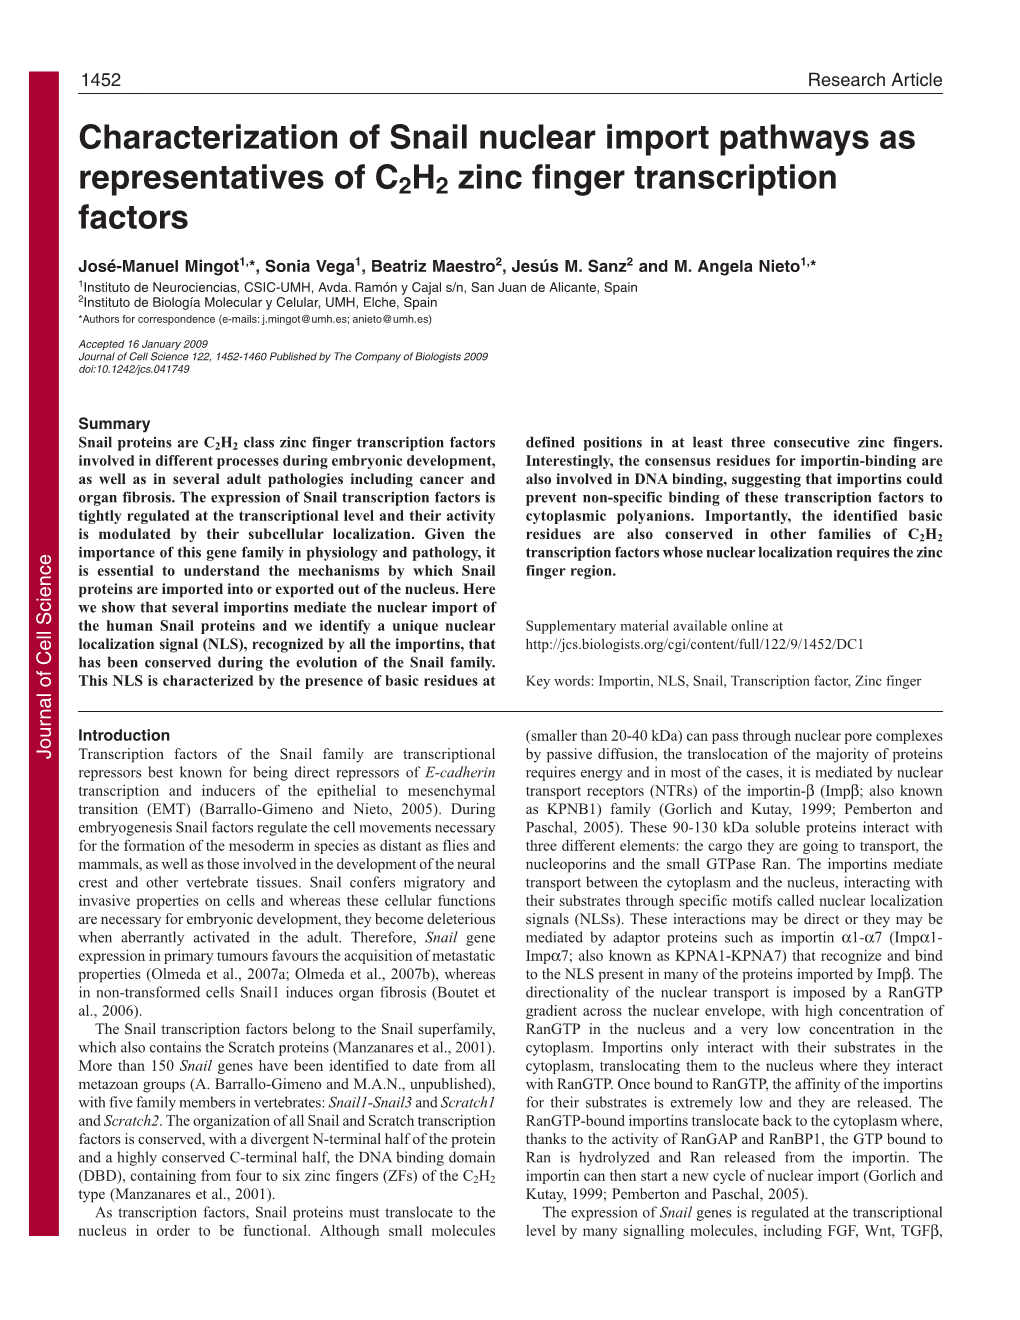 Characterization of Snail Nuclear Import Pathways As Representatives of C2H2 Zinc Finger Transcription Factors